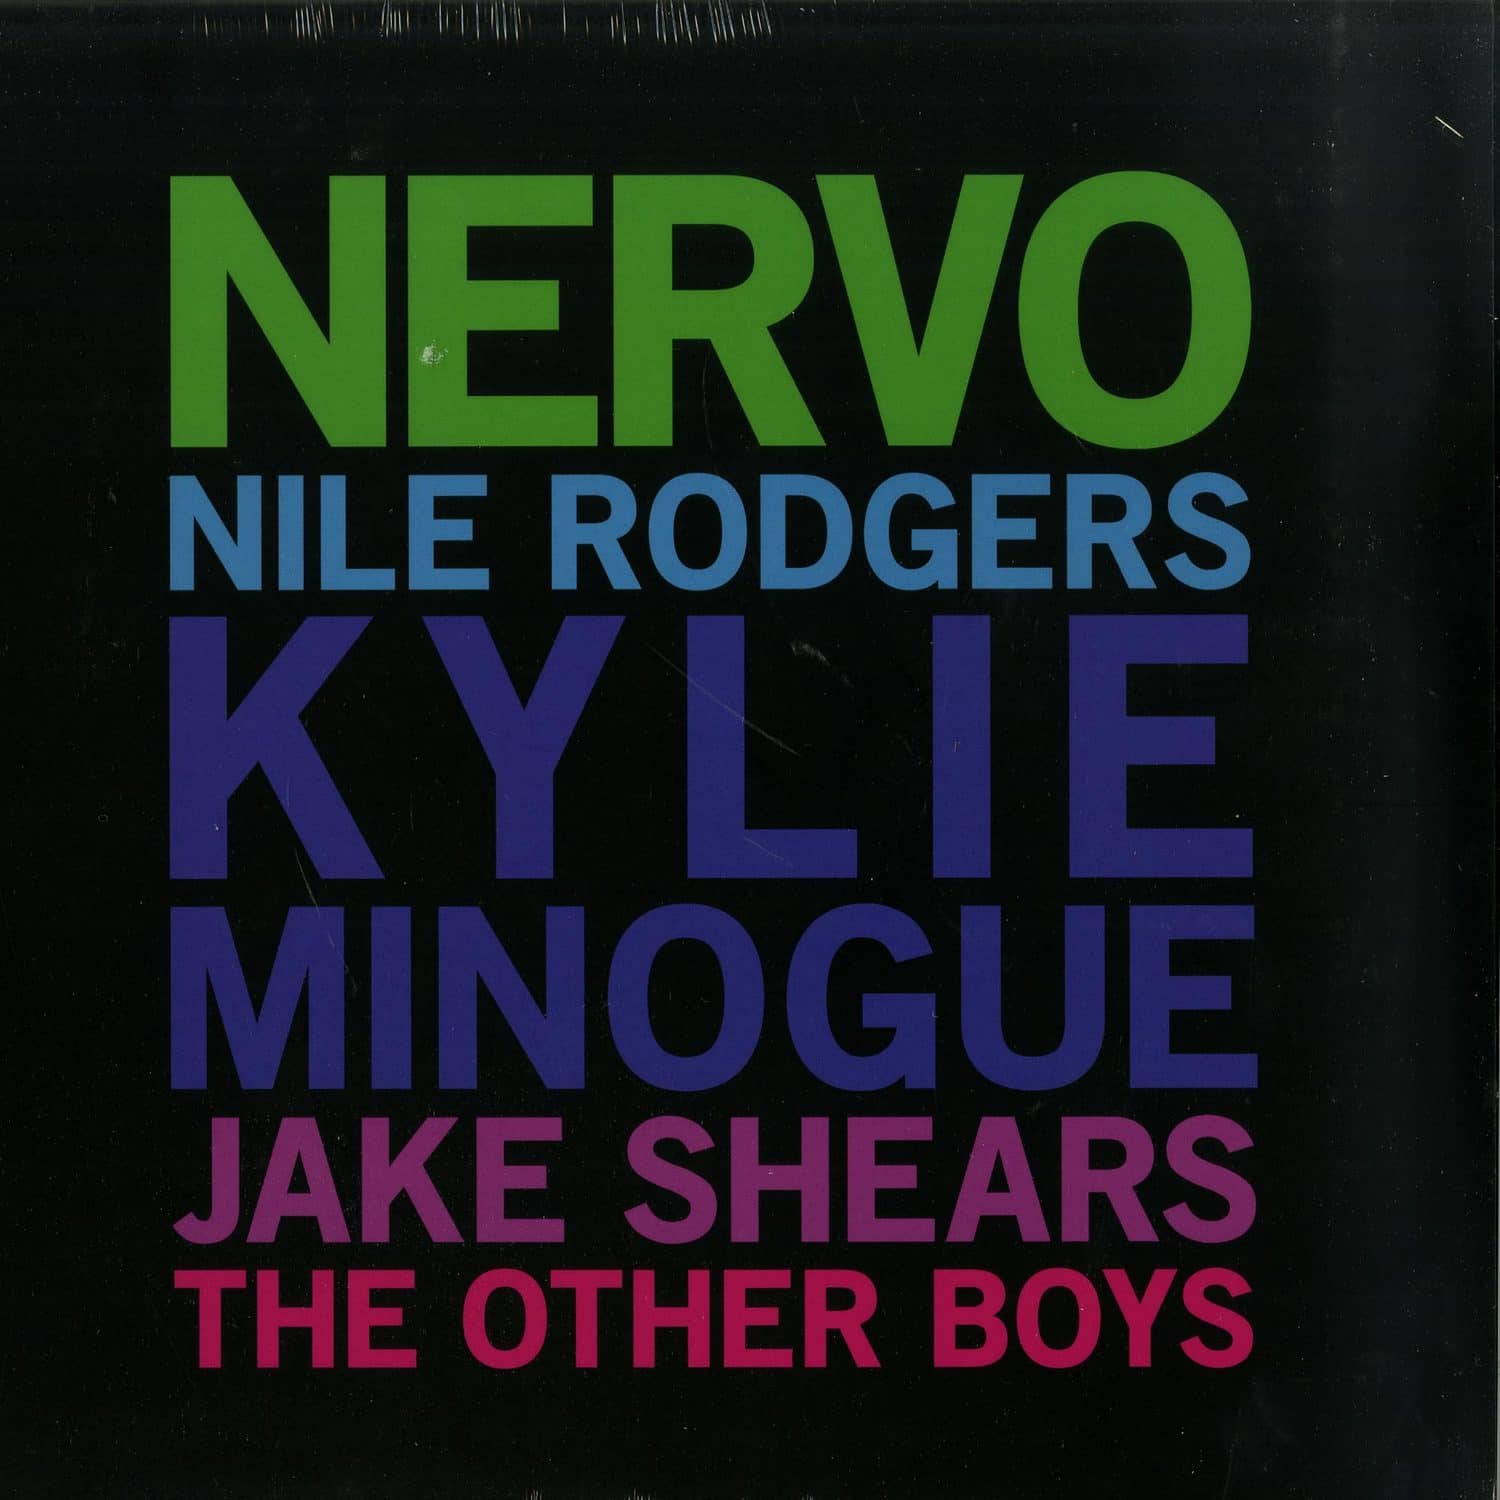 Nervo, Nile Rodgers, Kylie Minogue, Jake Shears - THE OTHER BOYS